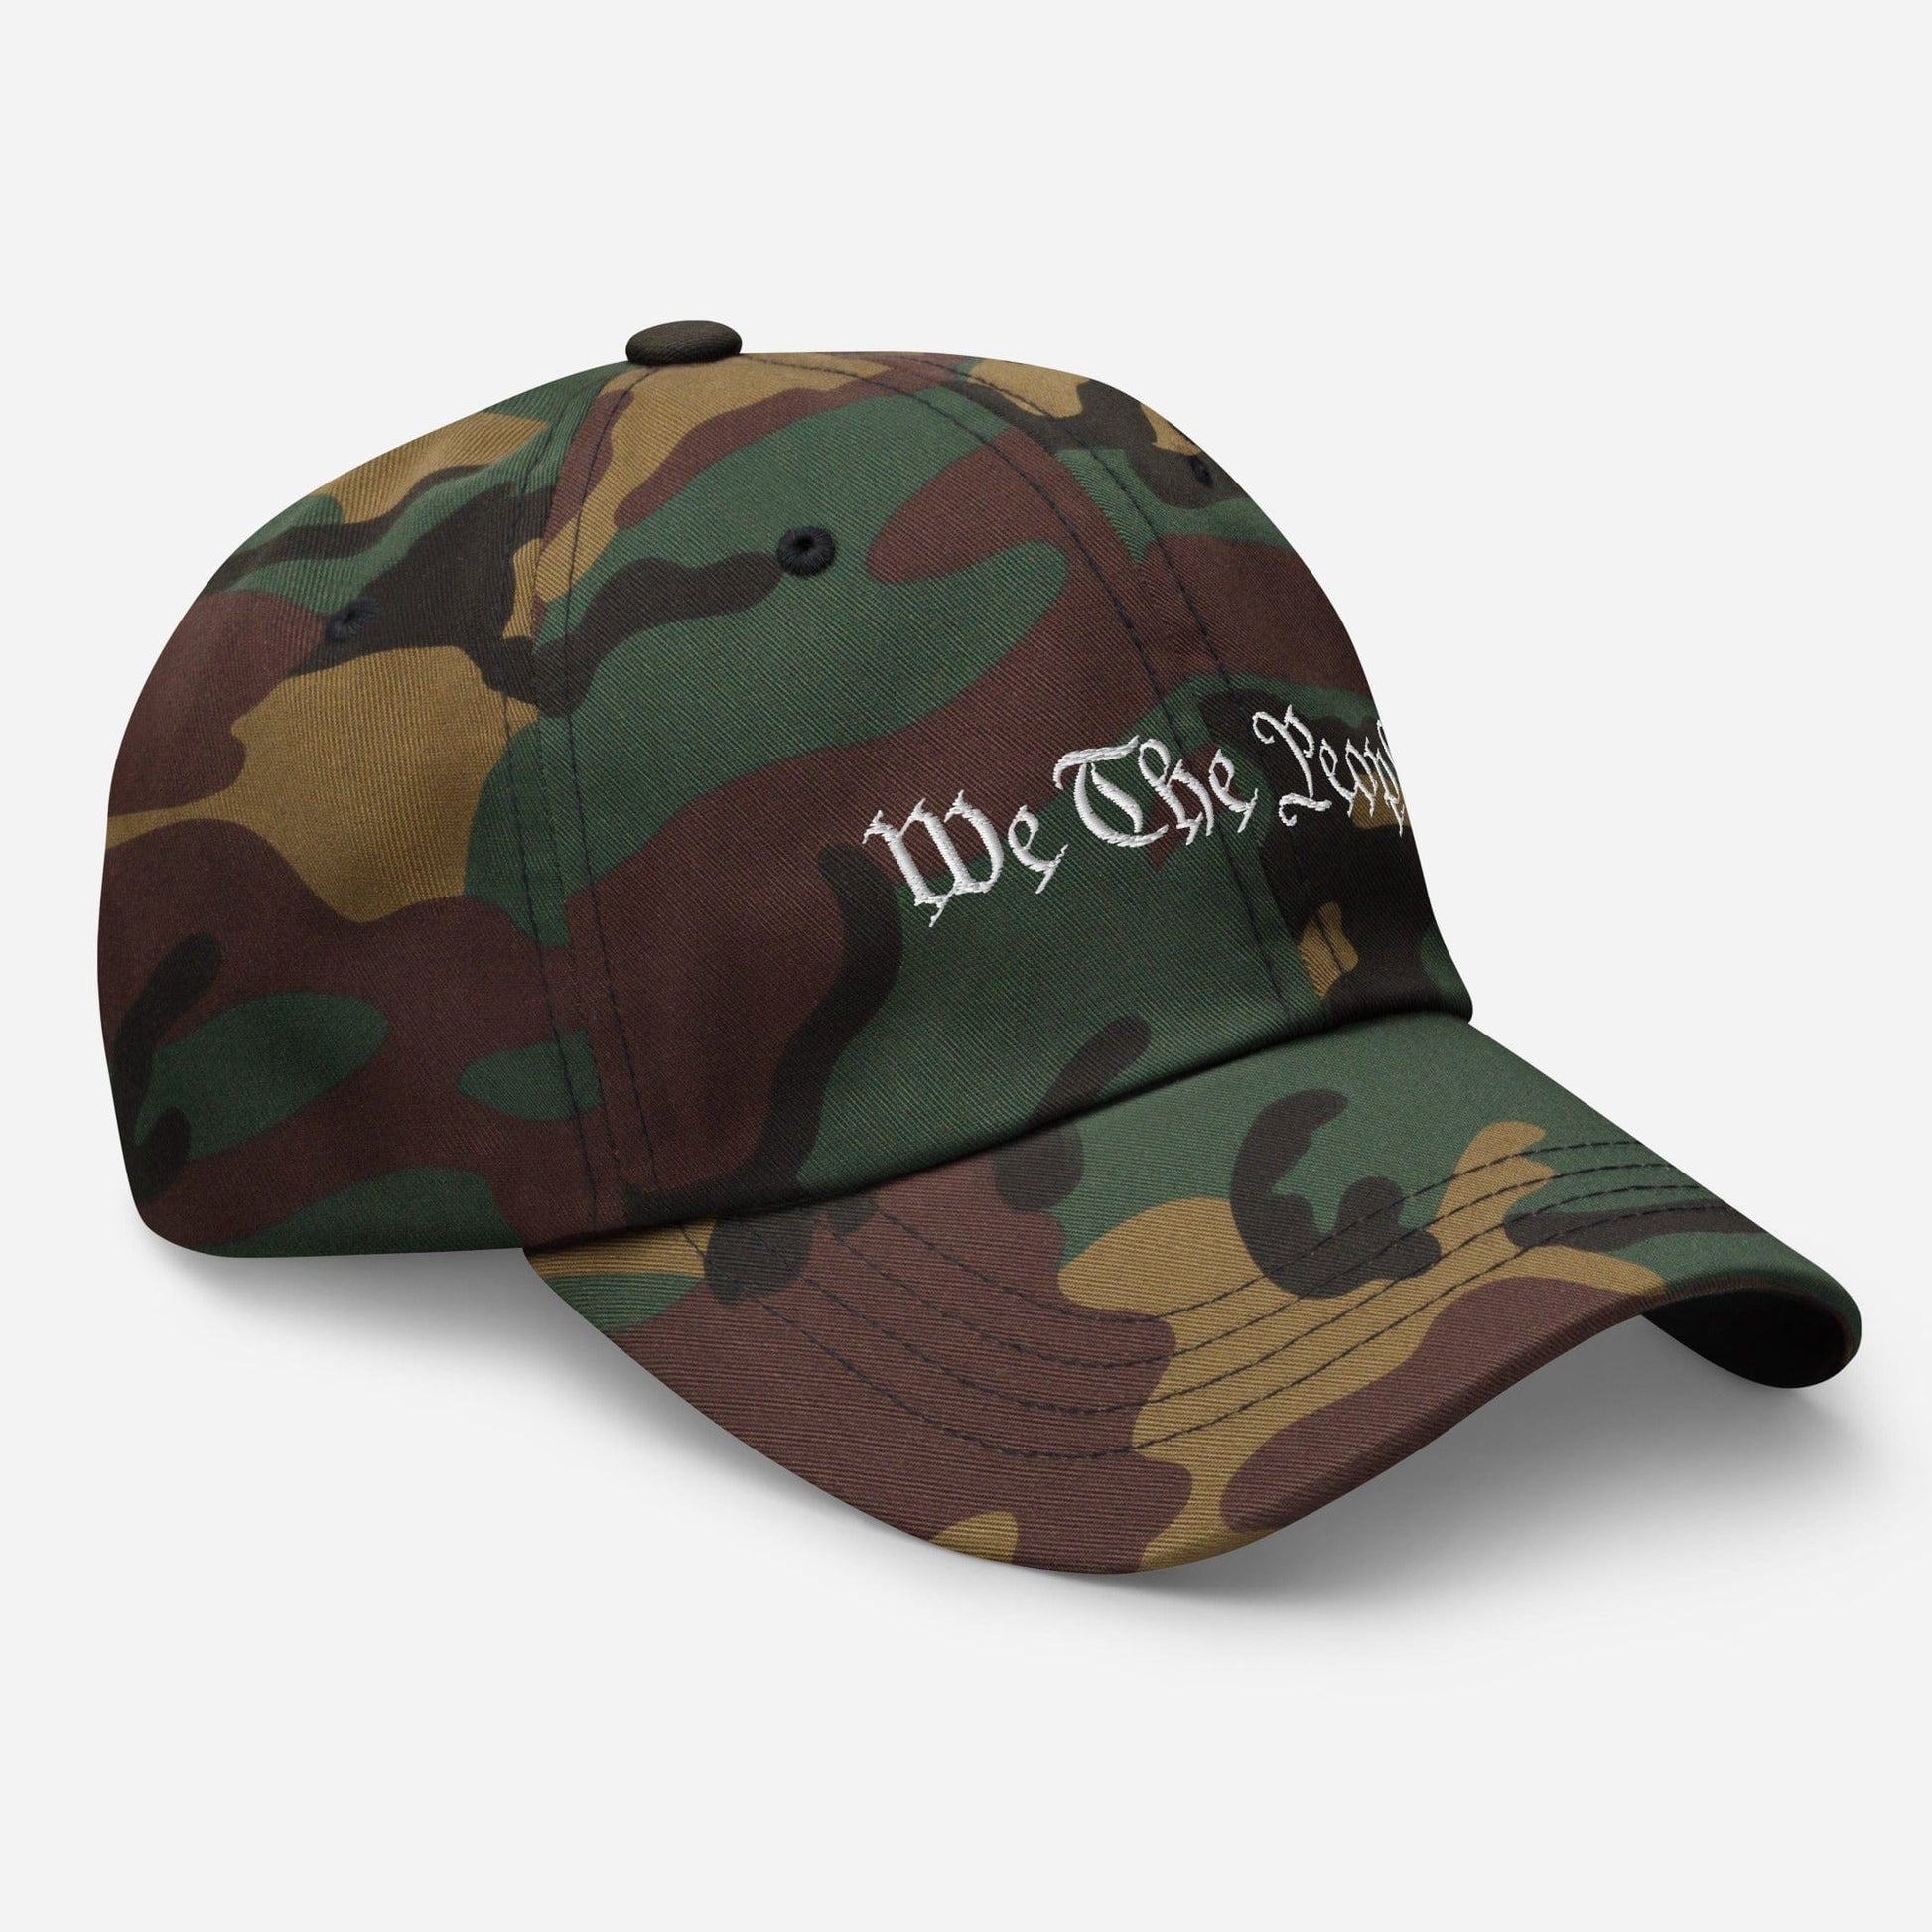 FreedomKat Designs We The People 1776 Hat